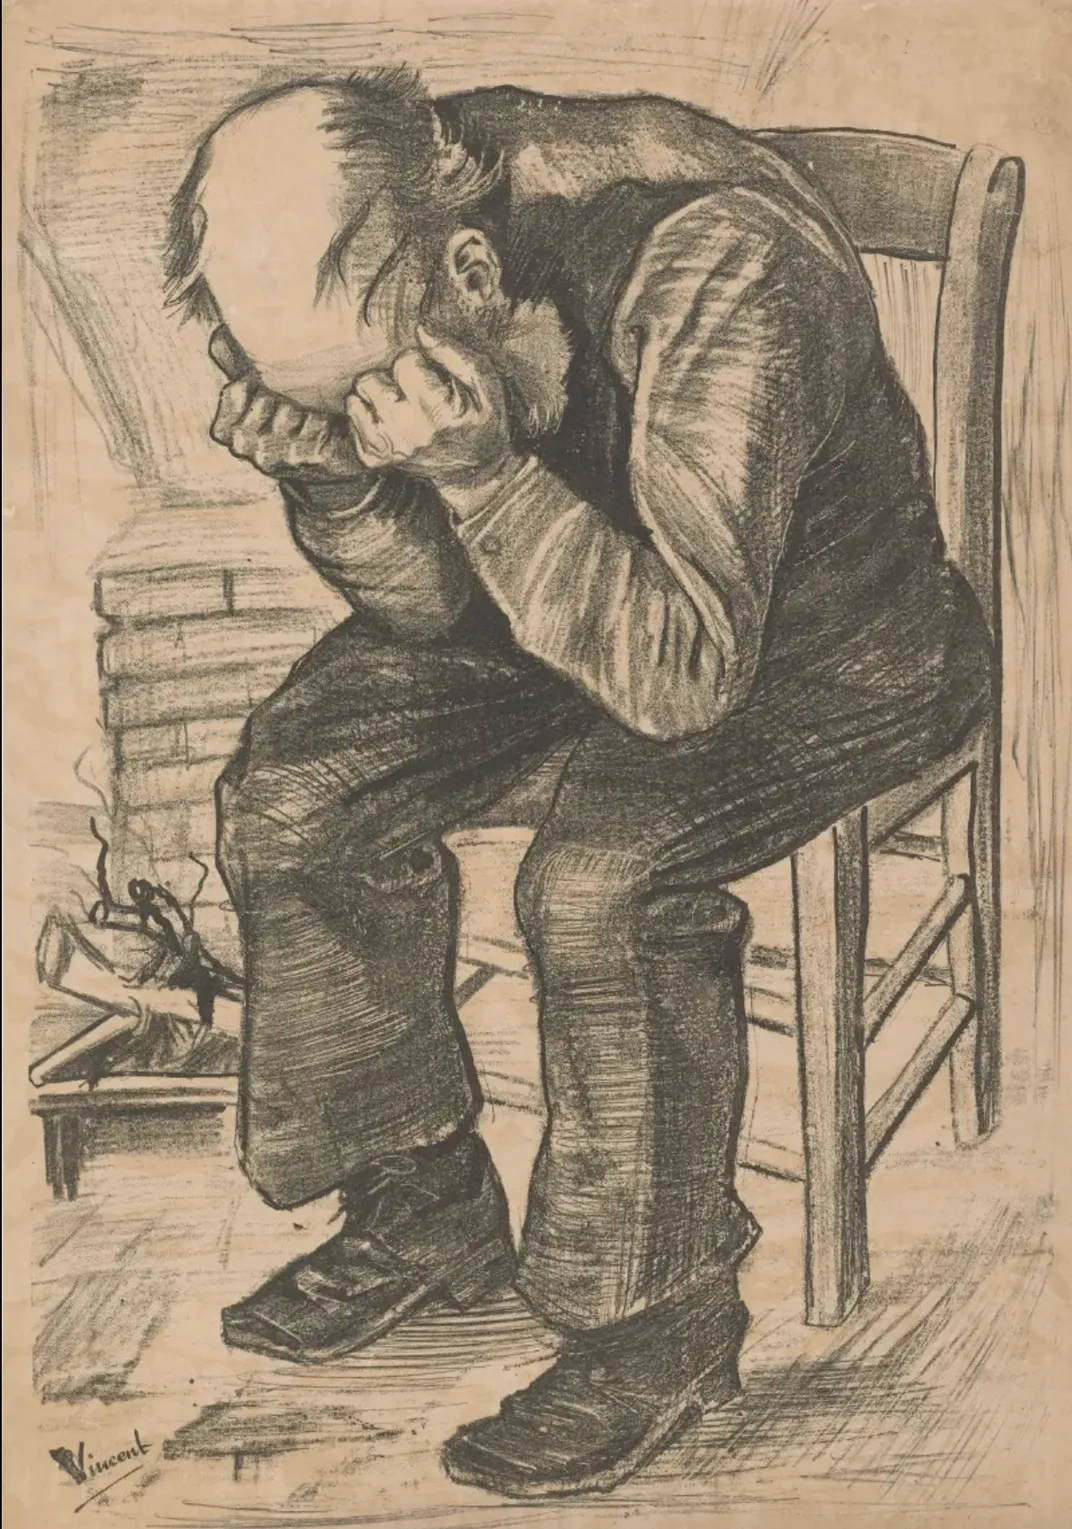 Vincent van Gogh, At Eternity's Gate, 1882, lithograph